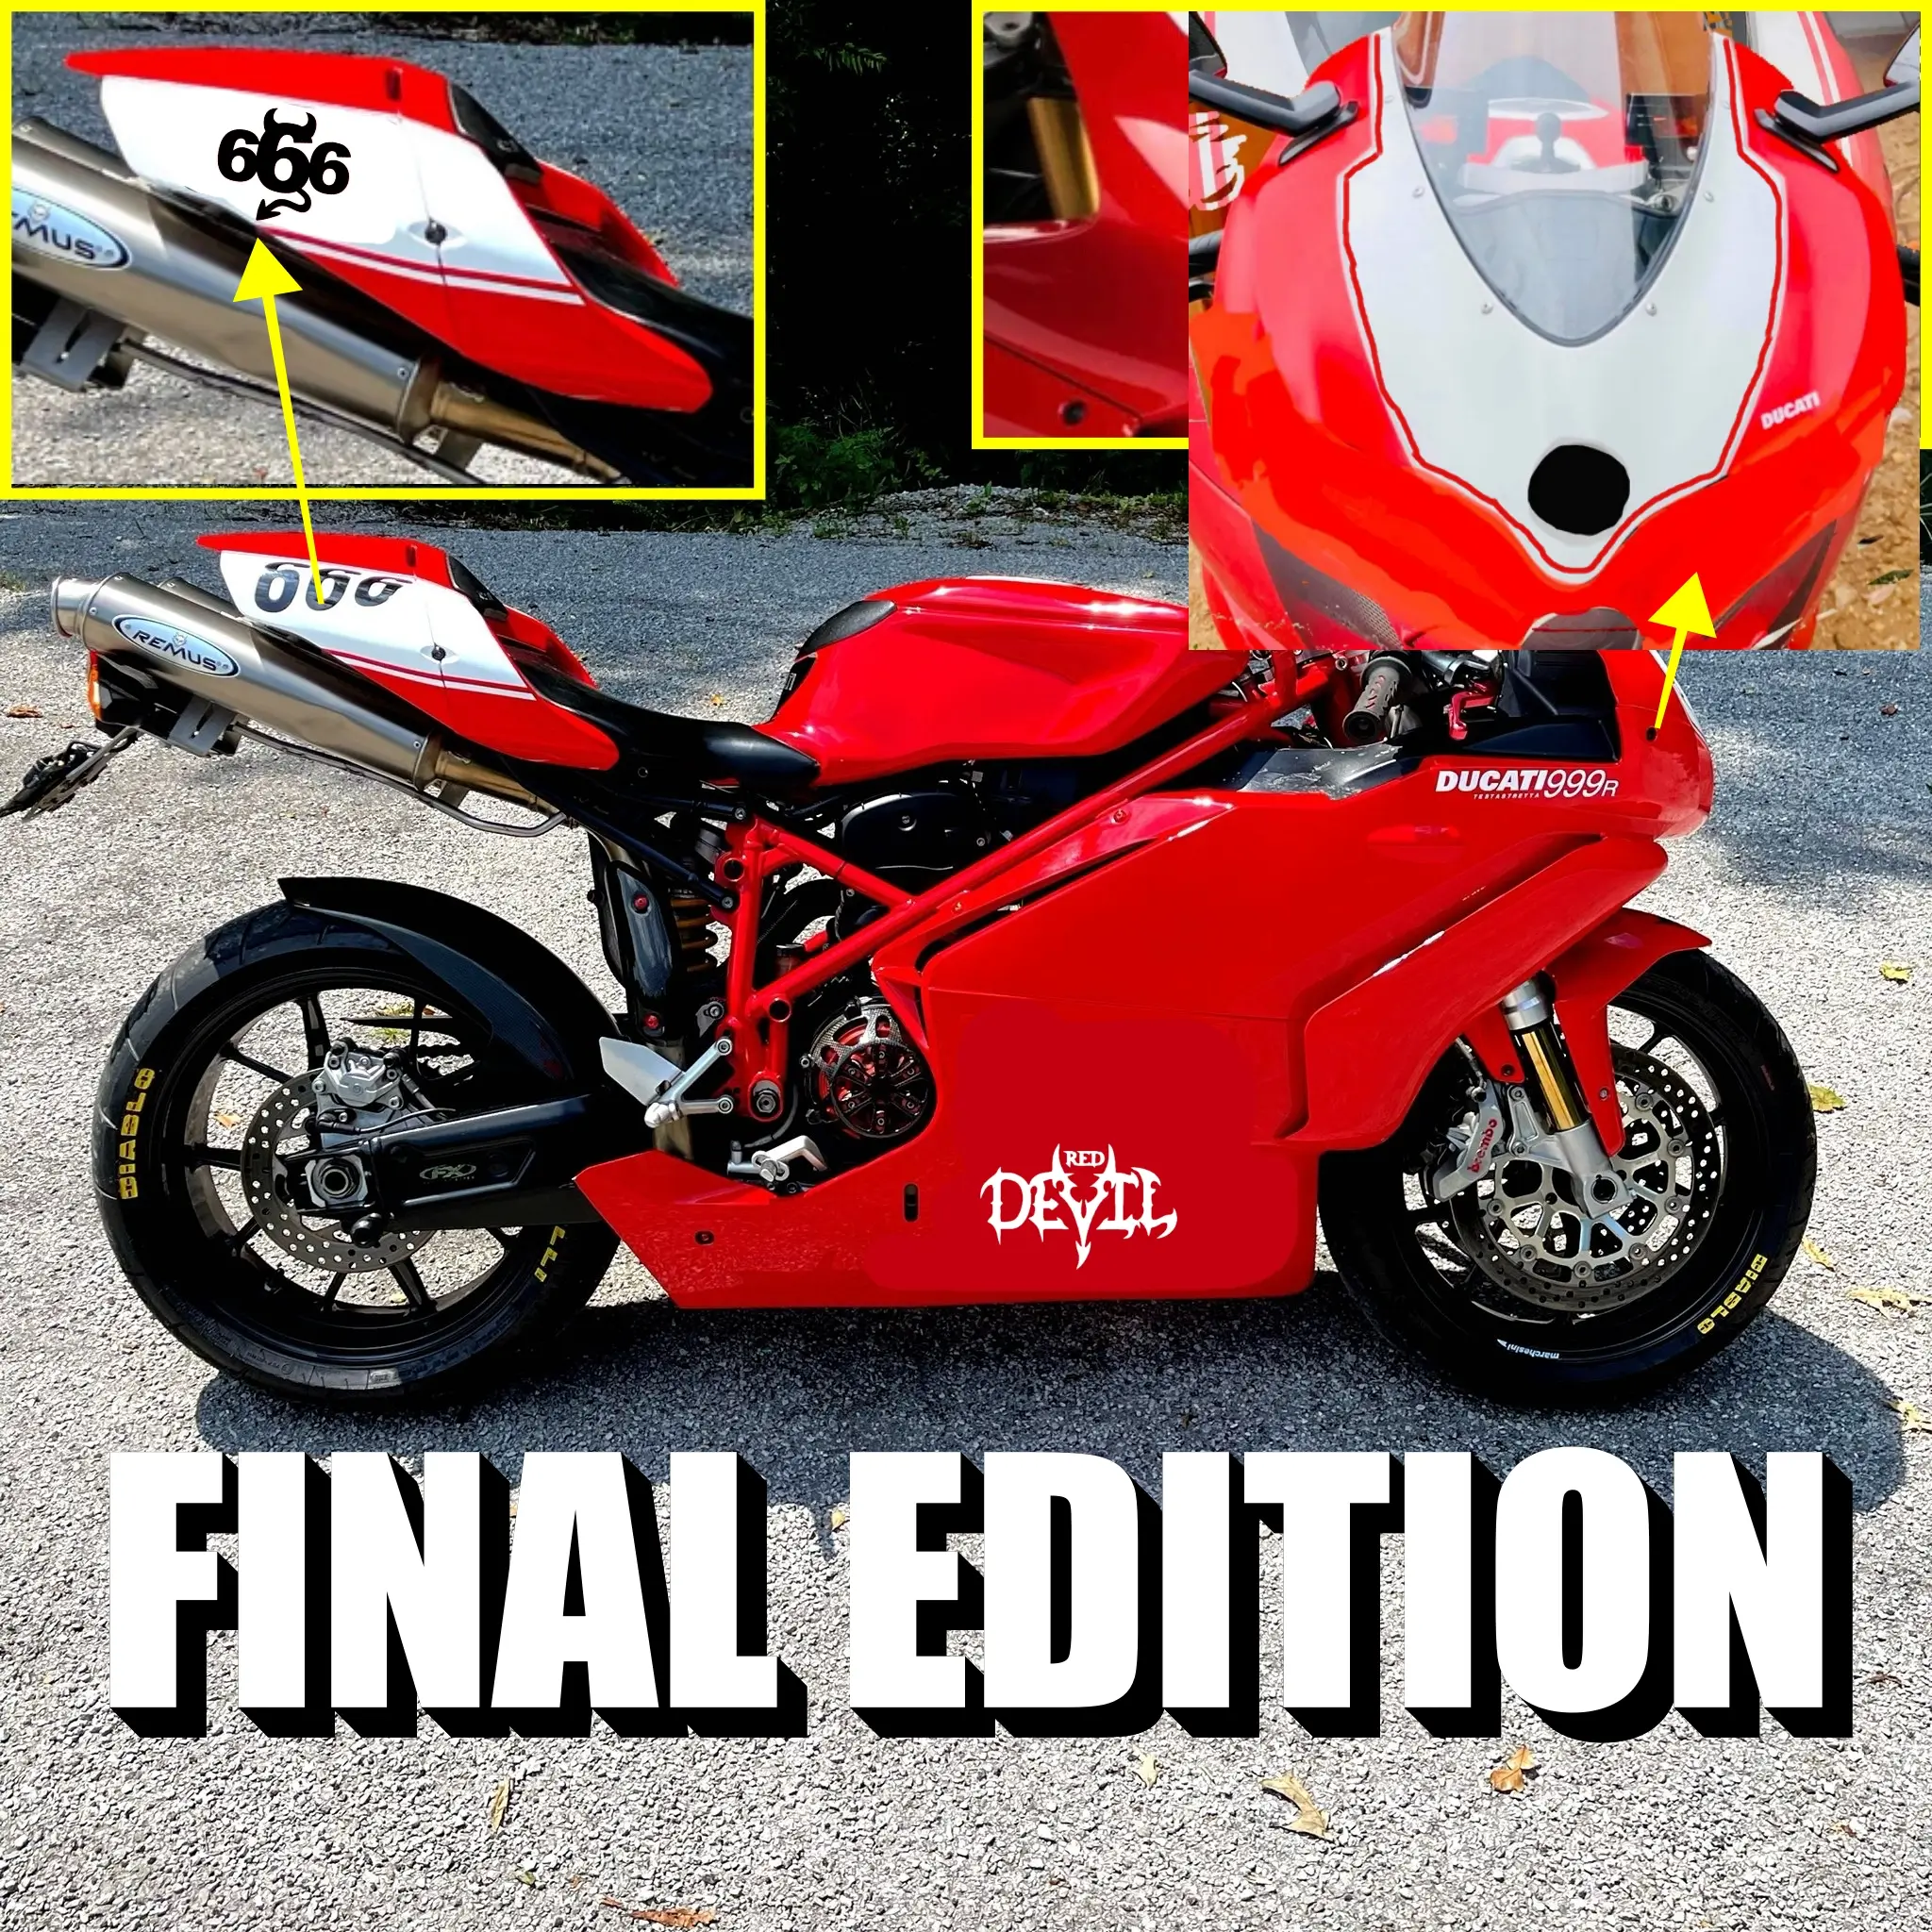 2006 Ducati 999r Red Devil Fairing 0